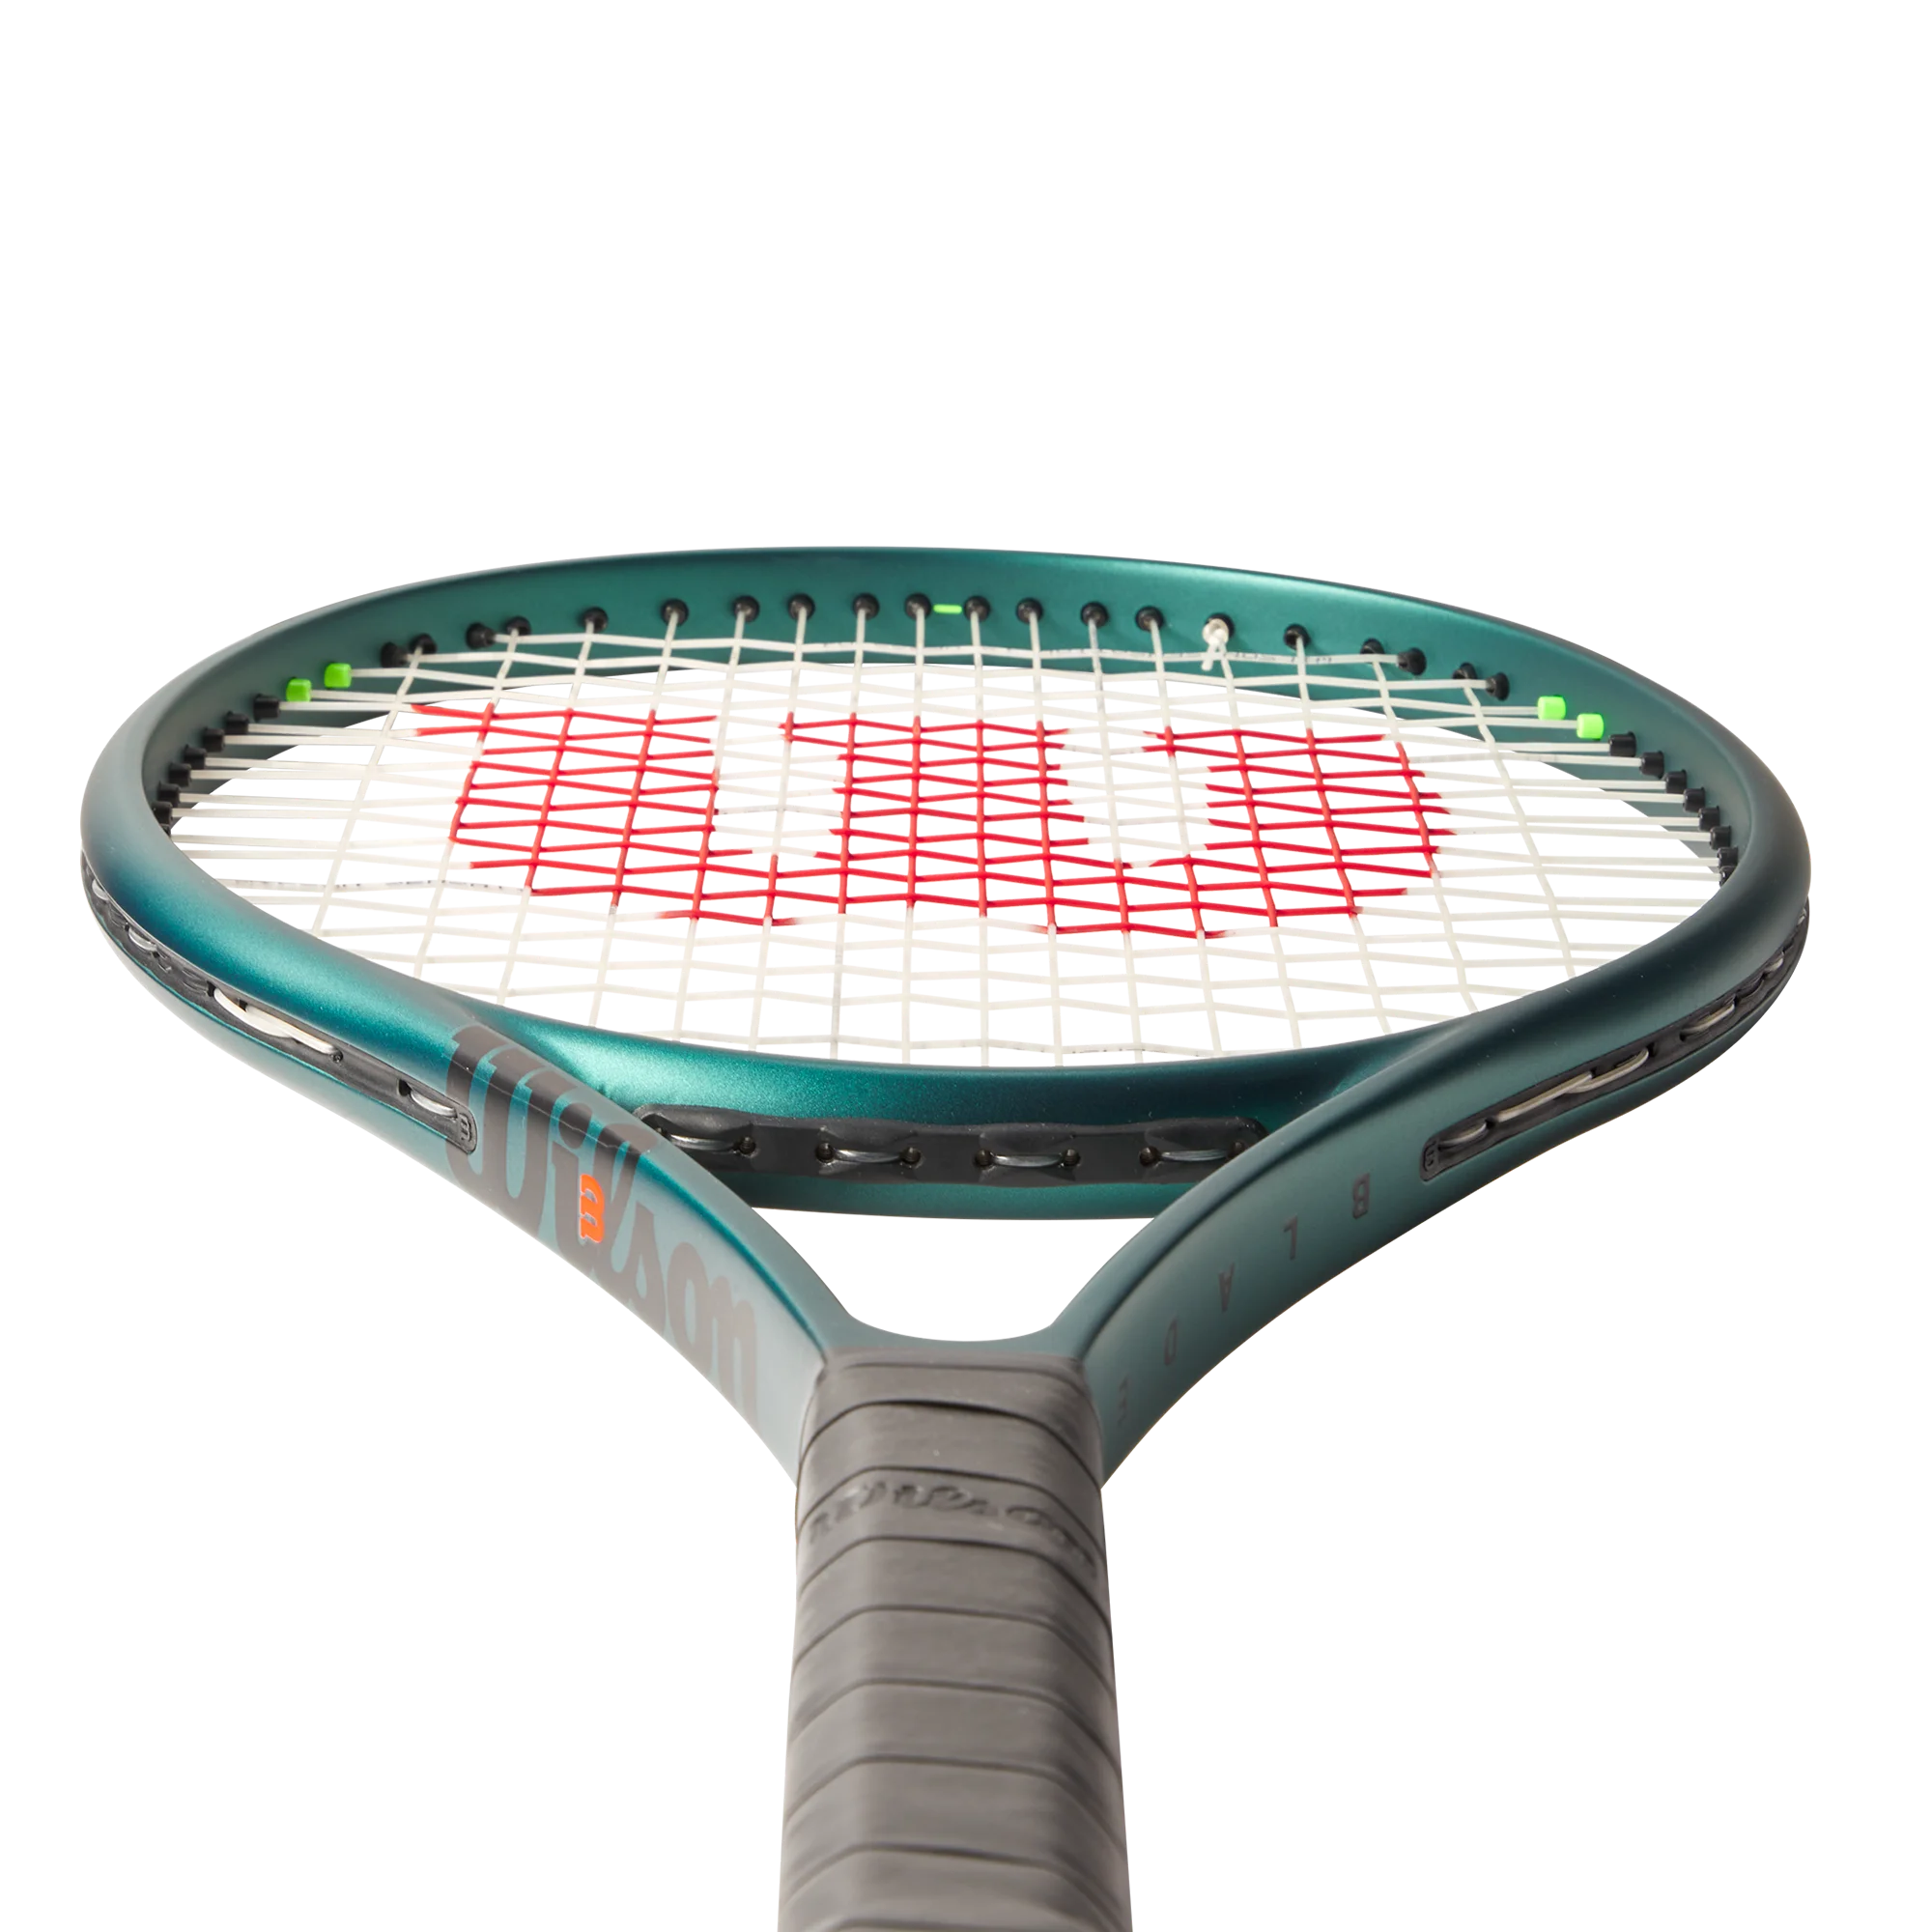 Wilson Blade 25 V9 Junior Tennis Racquet